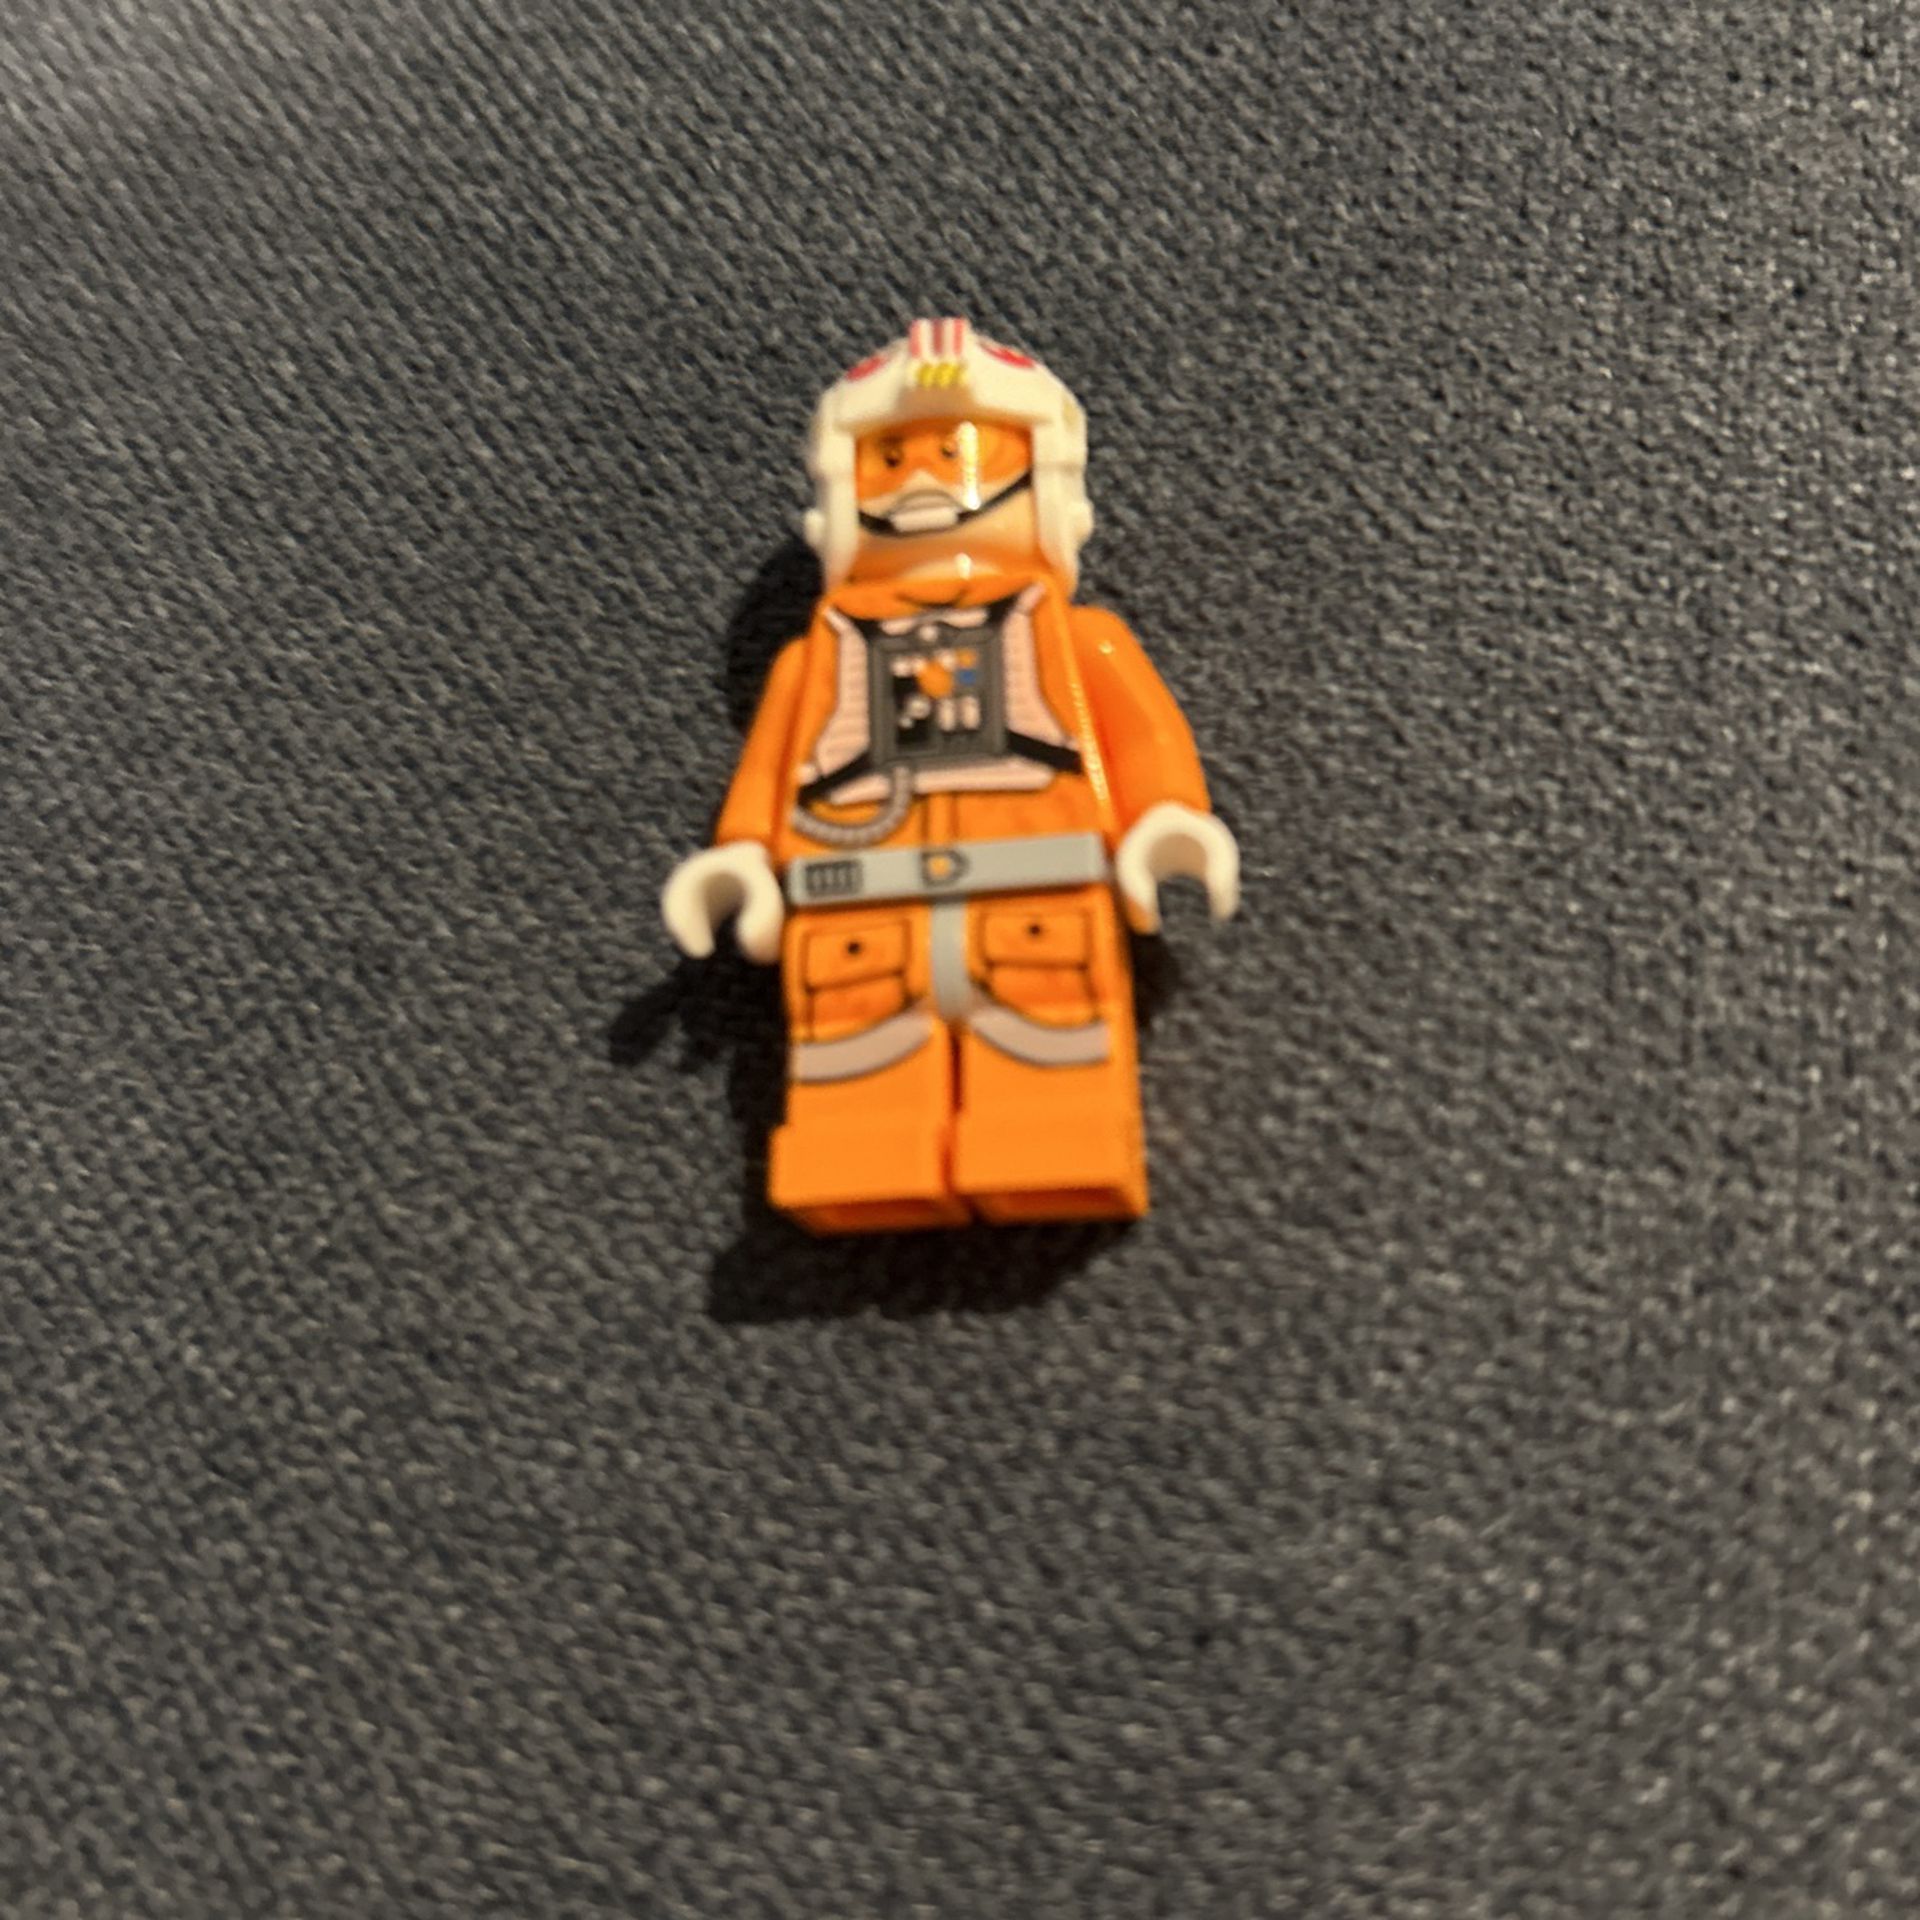 Rebel Pilot Lego Minifigure 